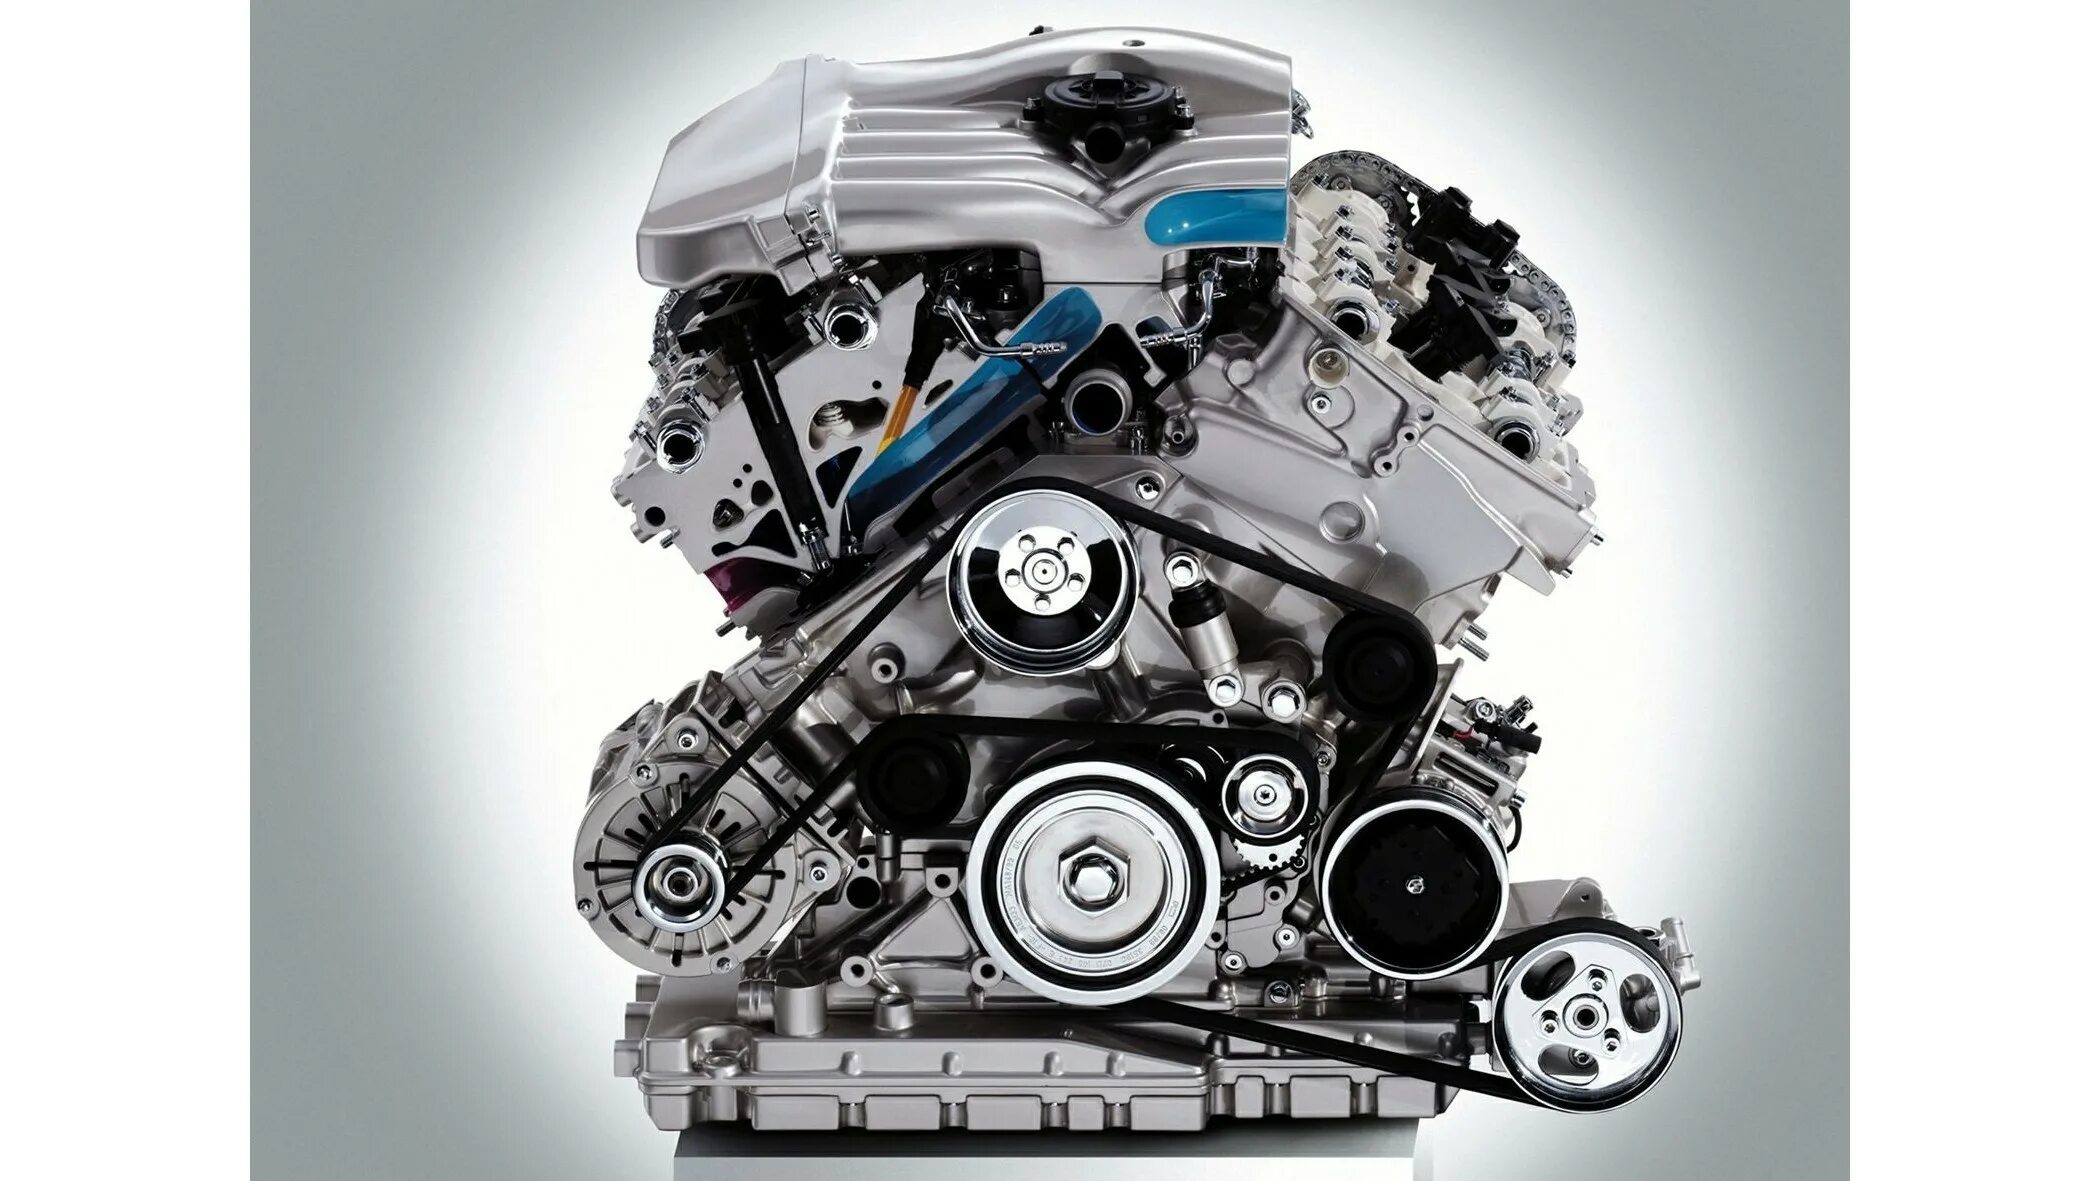 Мотор w8 Passat b5. W8 двигатель Фольксваген. Volkswagen Passat двигатель w8. W8 двигатель Фольксваген Пассат b5. Двигатель на автомобиль volkswagen